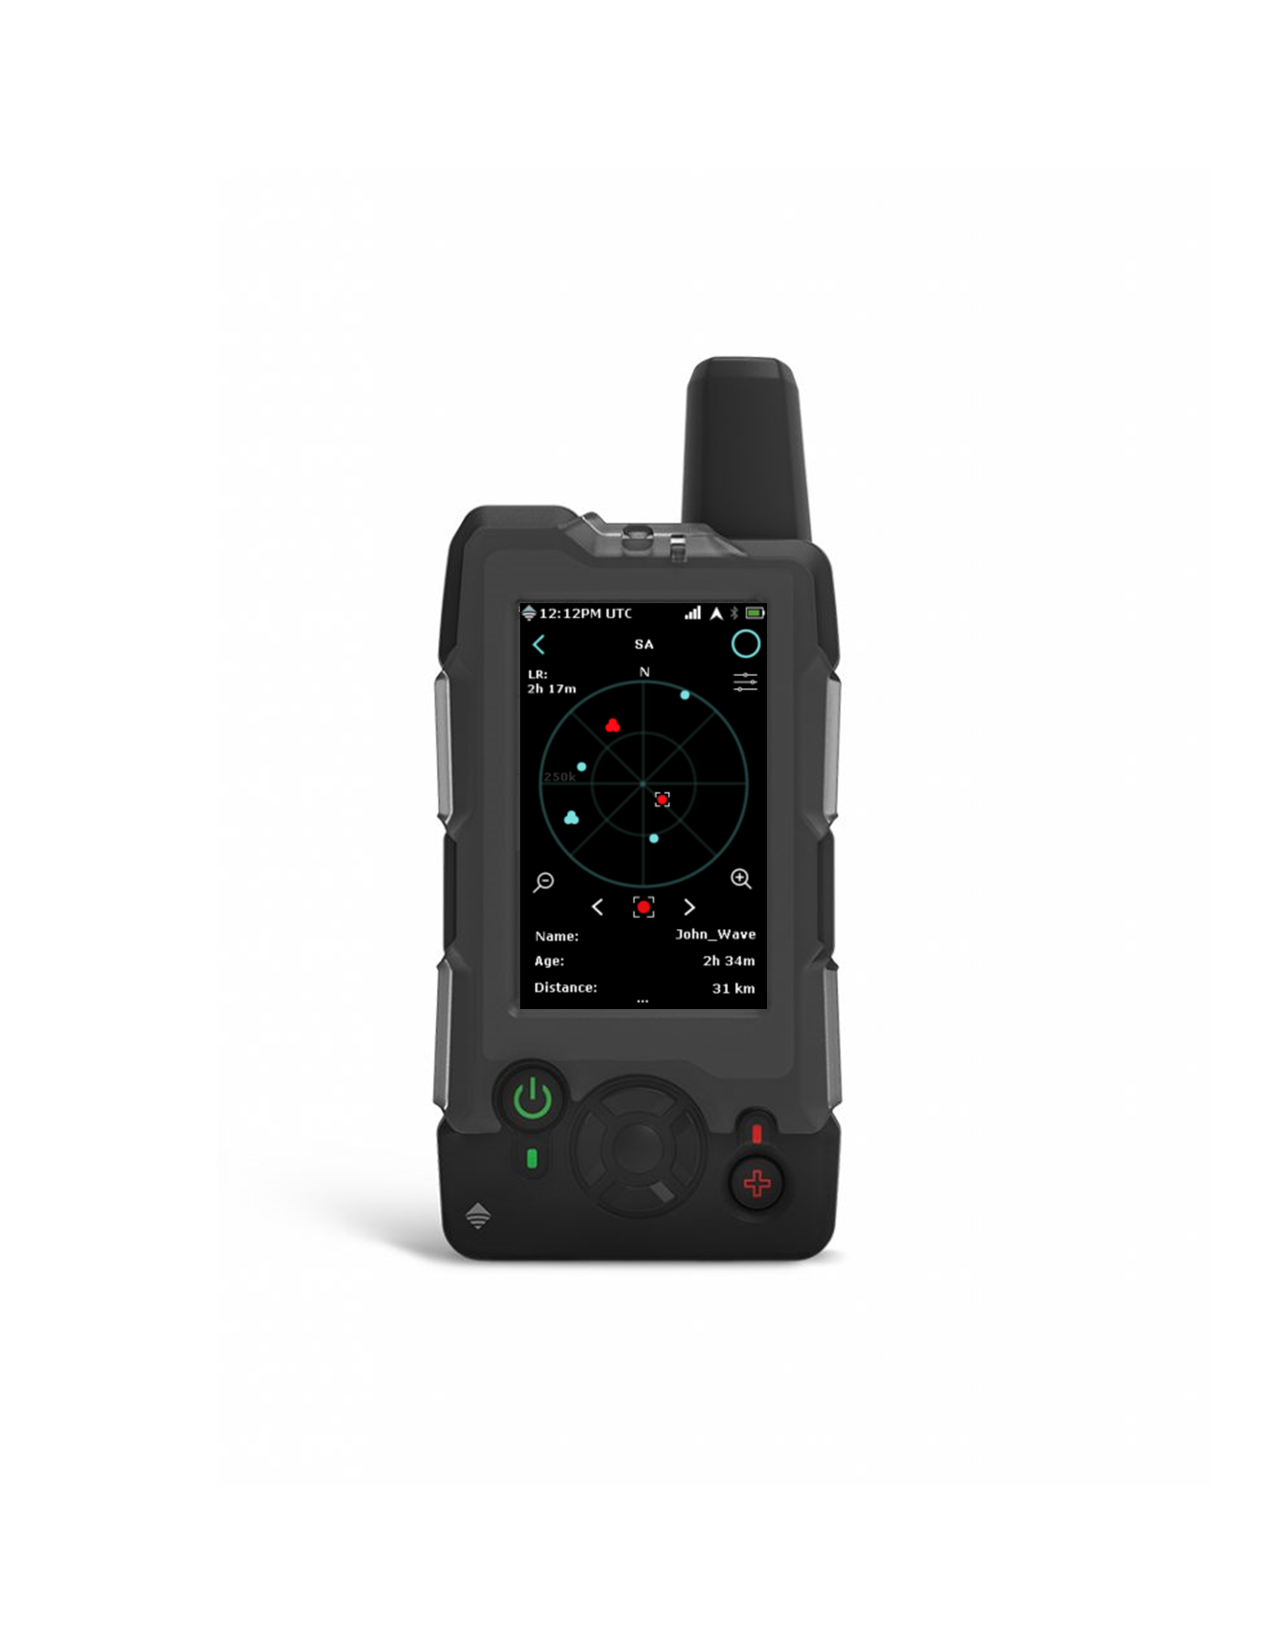 AVETM mobile device - a rugged, Iridiumconnected tracking device that shows SA  information